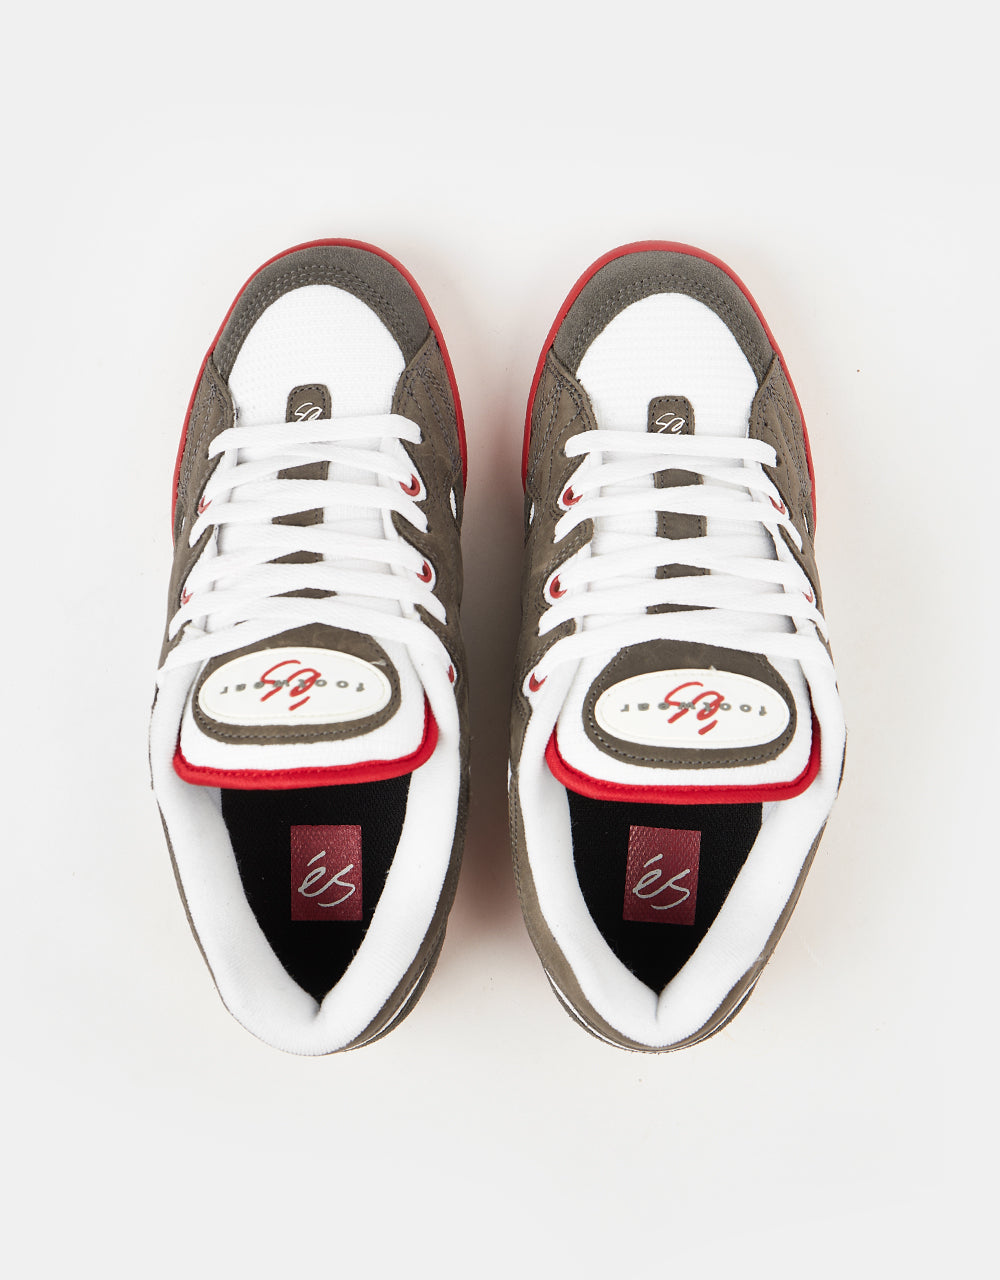 éS One Nine 7 Skate Shoes - Grey/White/Red